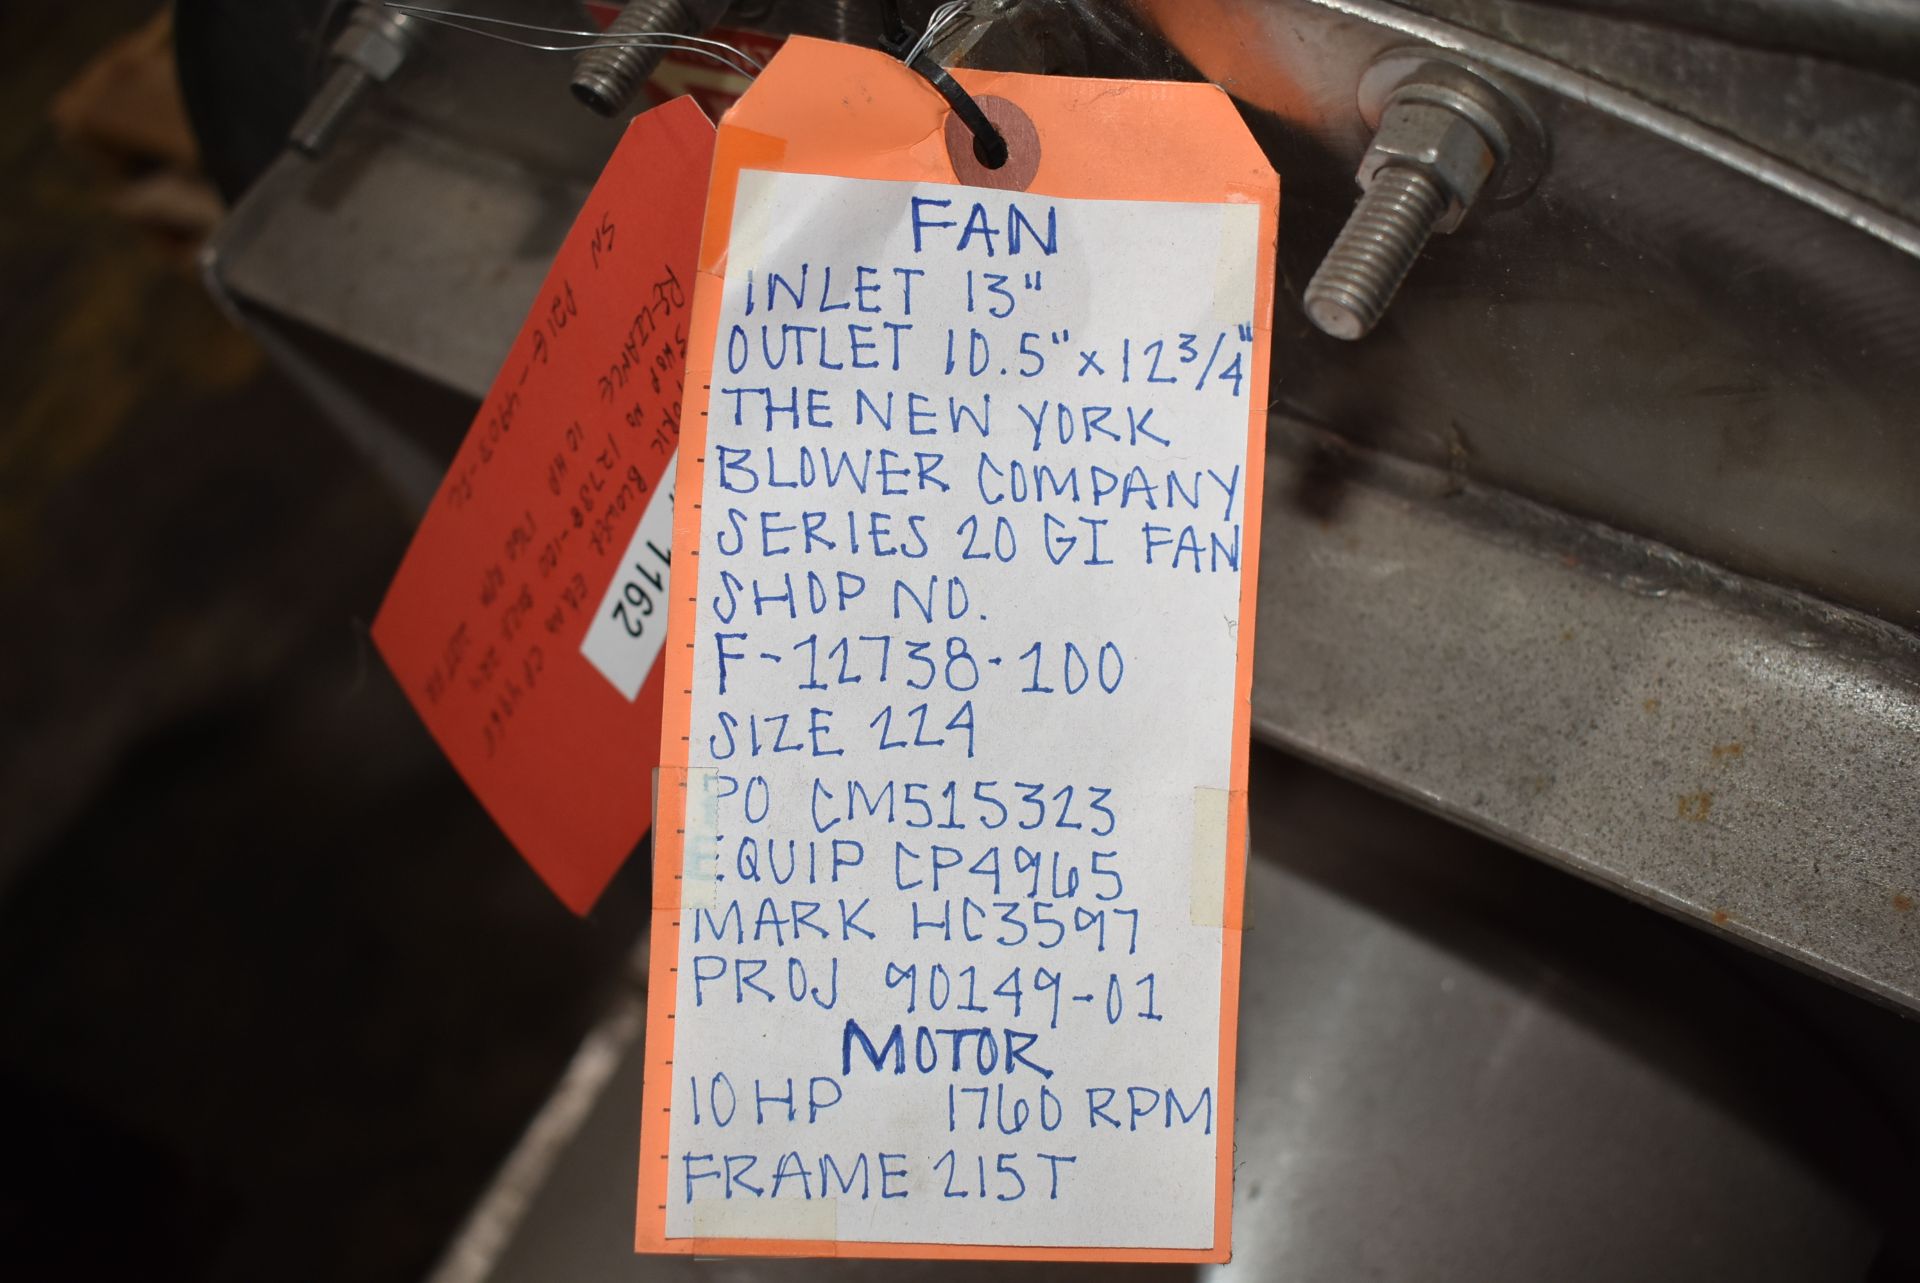 New York Blower, Series 20 GI Fan, Size 224 w/10 HP Motor, Stainless Steel. RIGGING/LOADING FEE $30 - Image 2 of 3